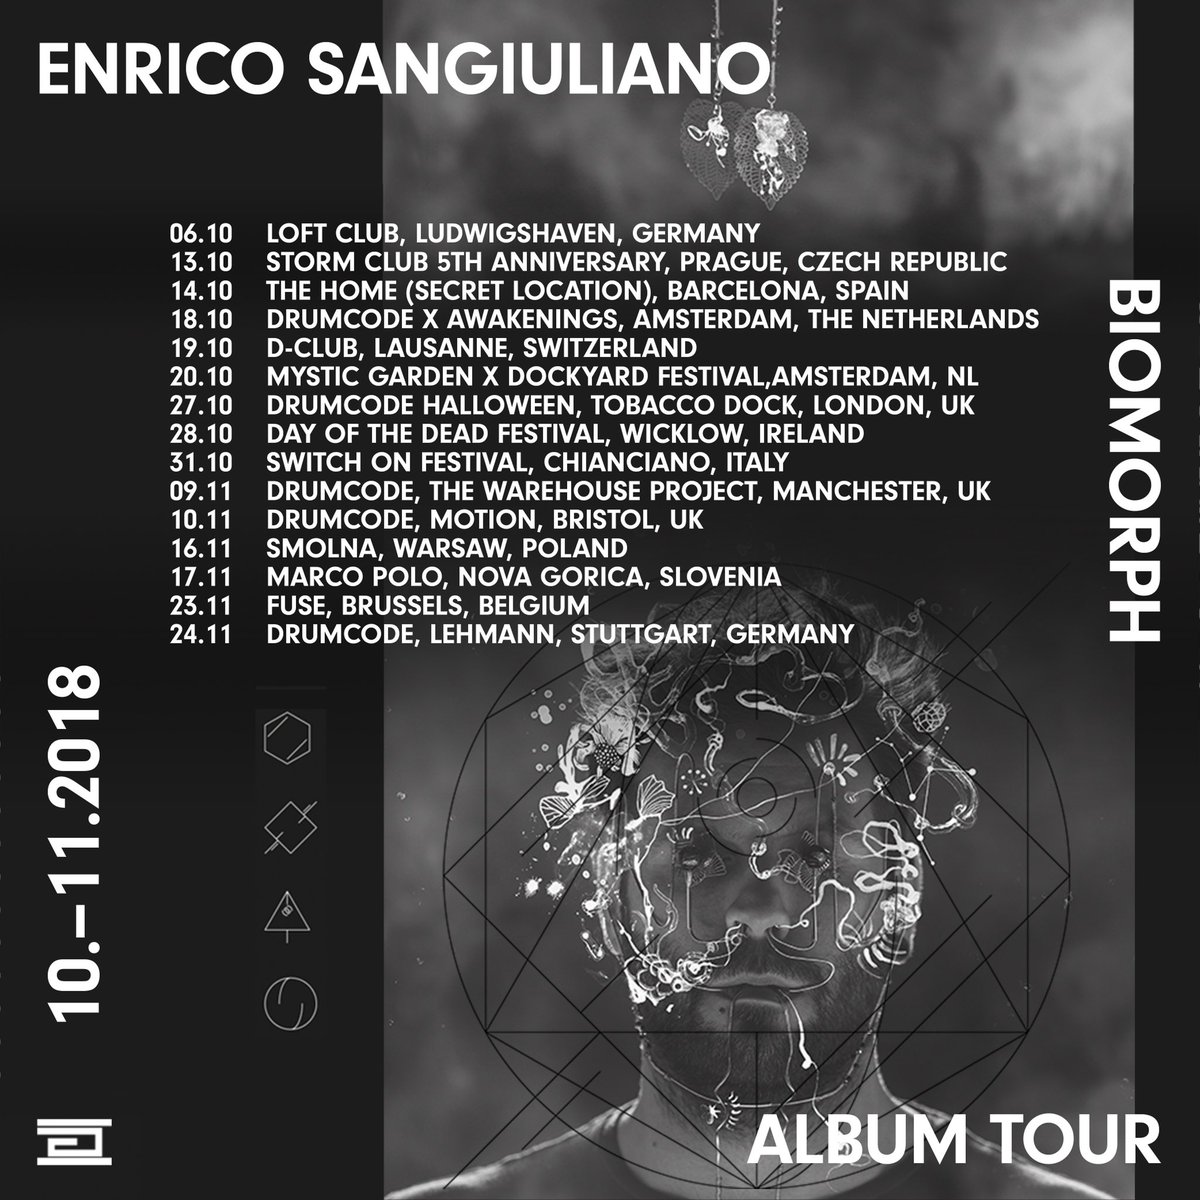 Biomorph Album Tour / Oct-Nov 2018.
Can’t think of a better schedule! 🔥 
_
#biomorph #biomorphworldtour #drumcode #enricosangiuliano #techno